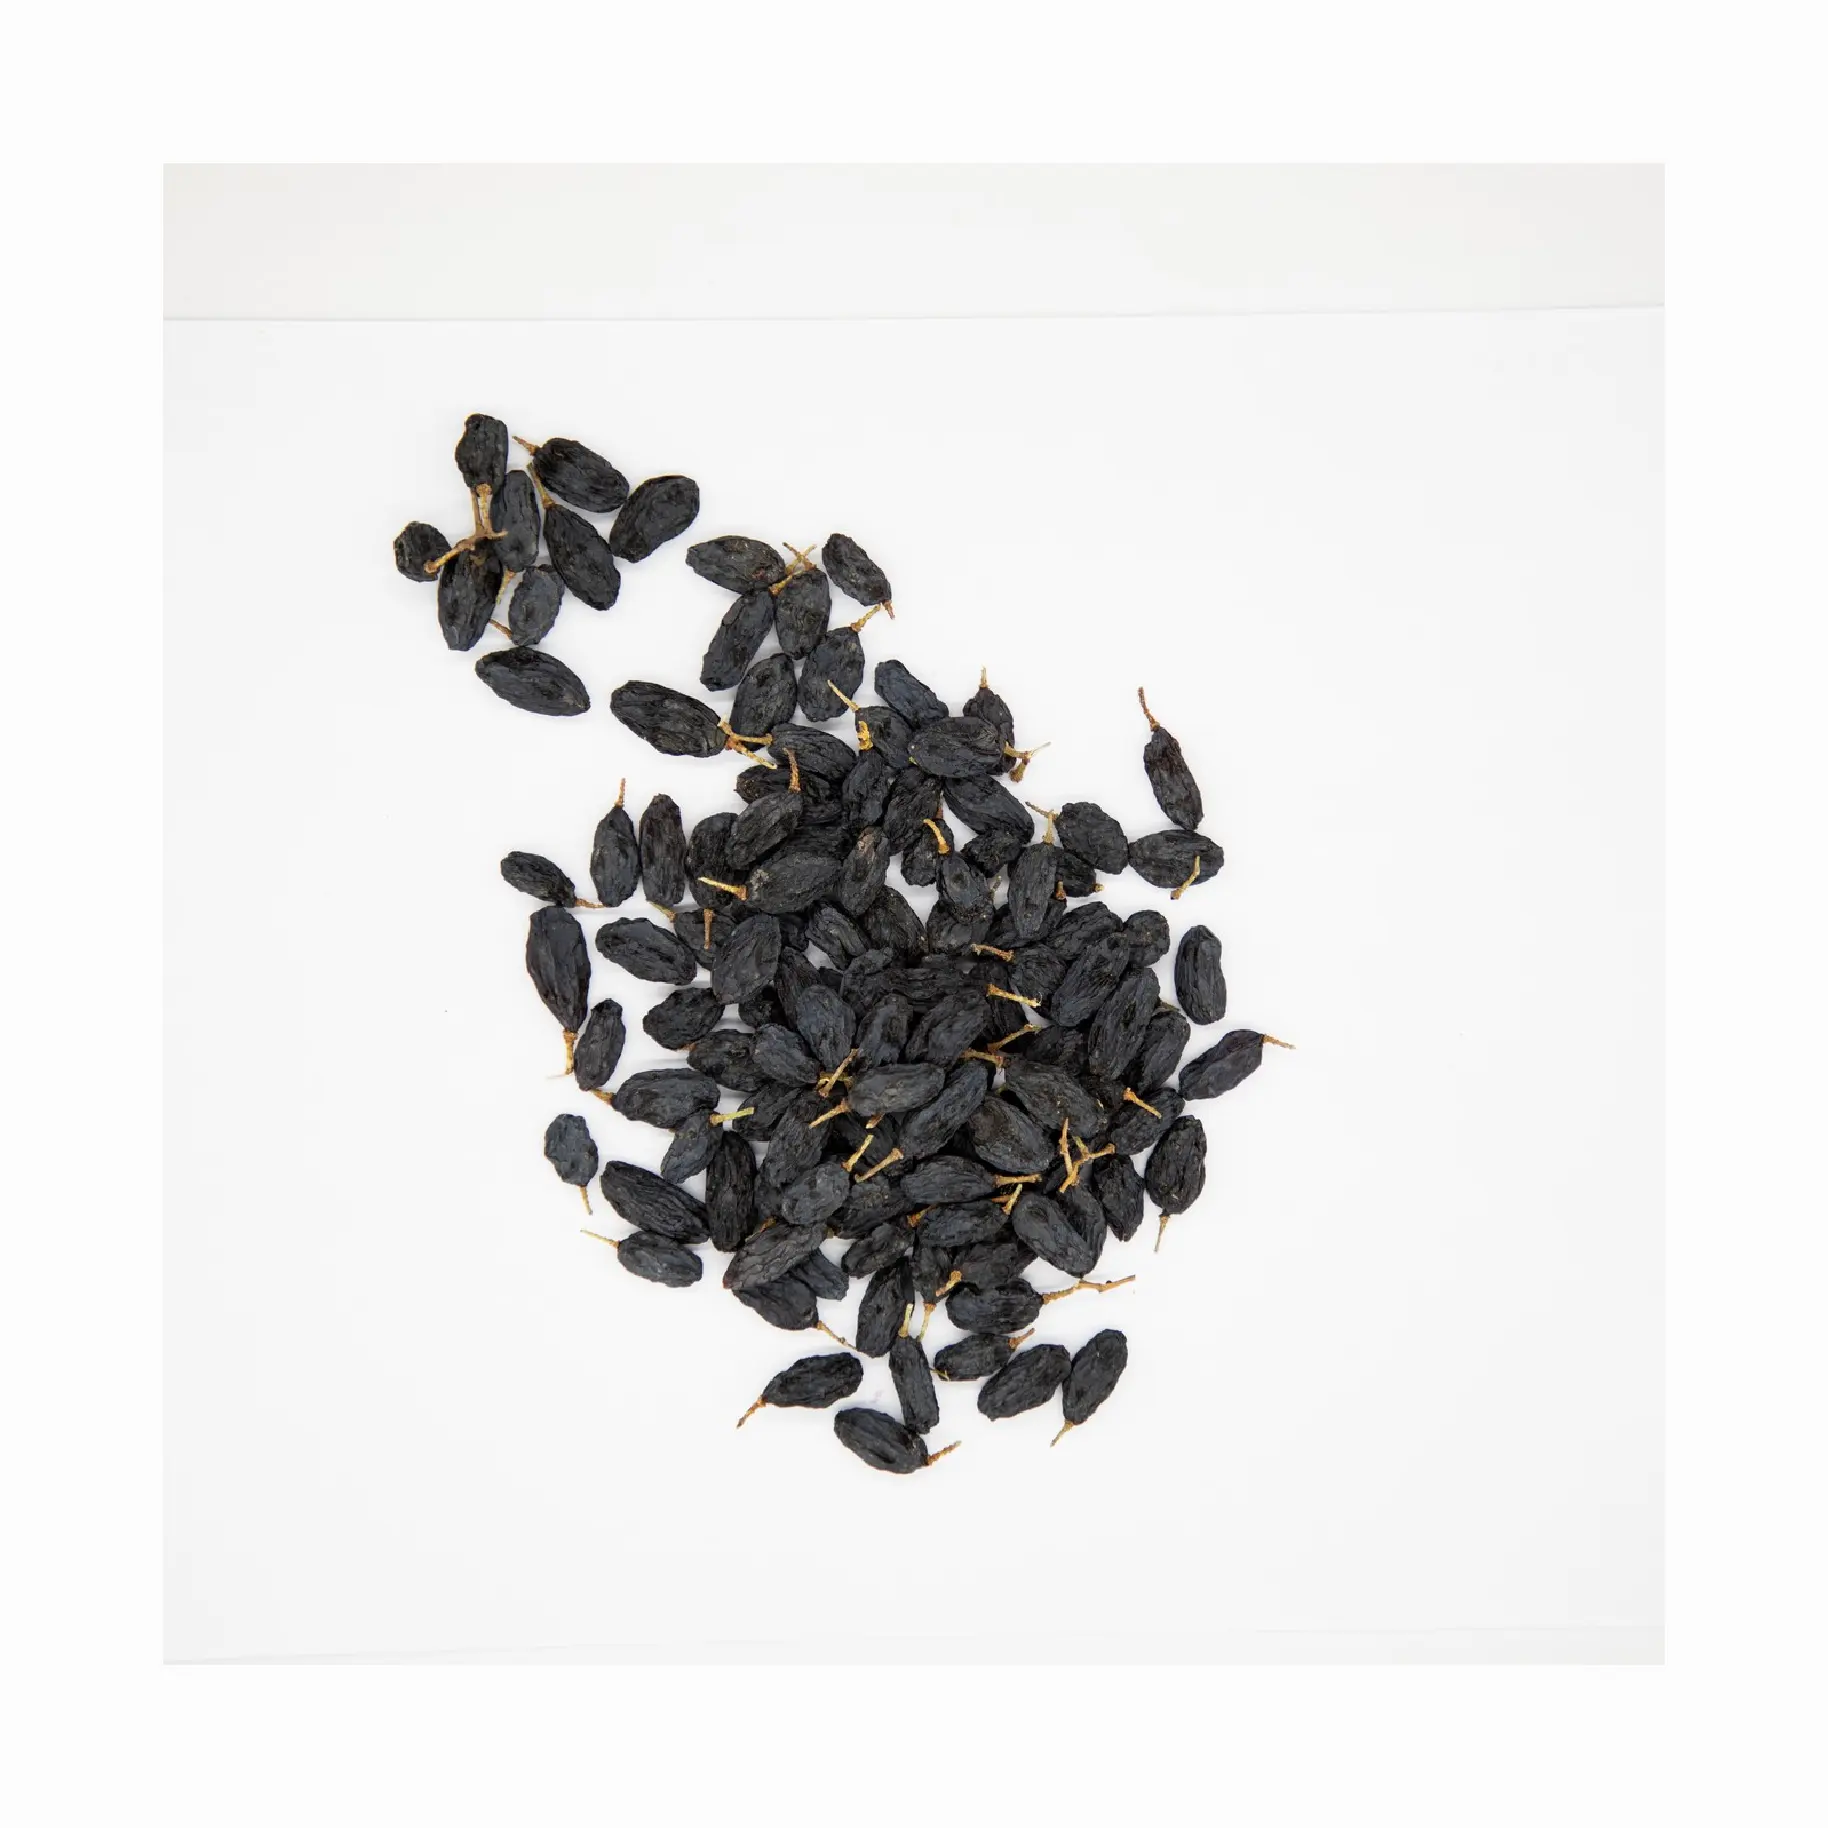 Raisins black-shade dried (100-120) Wholesale Natural Bulk Large Raisins Pure Hybrid Black Raisins for food Healthy Dried Fruits